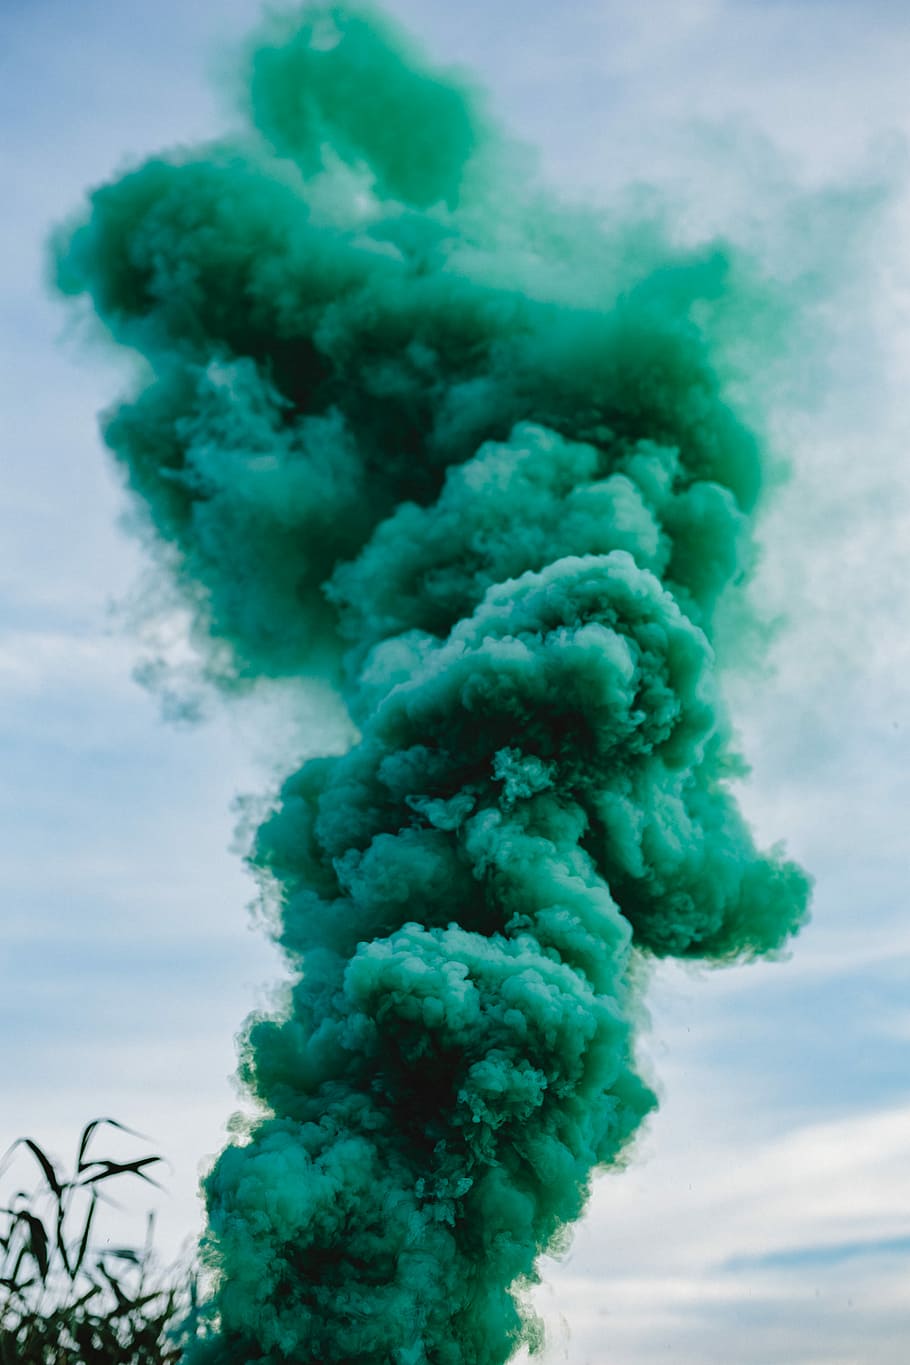 green smoke bomb, smoke bomb, abstract, background, outdoor, green smoke, green, nature, sky, blue